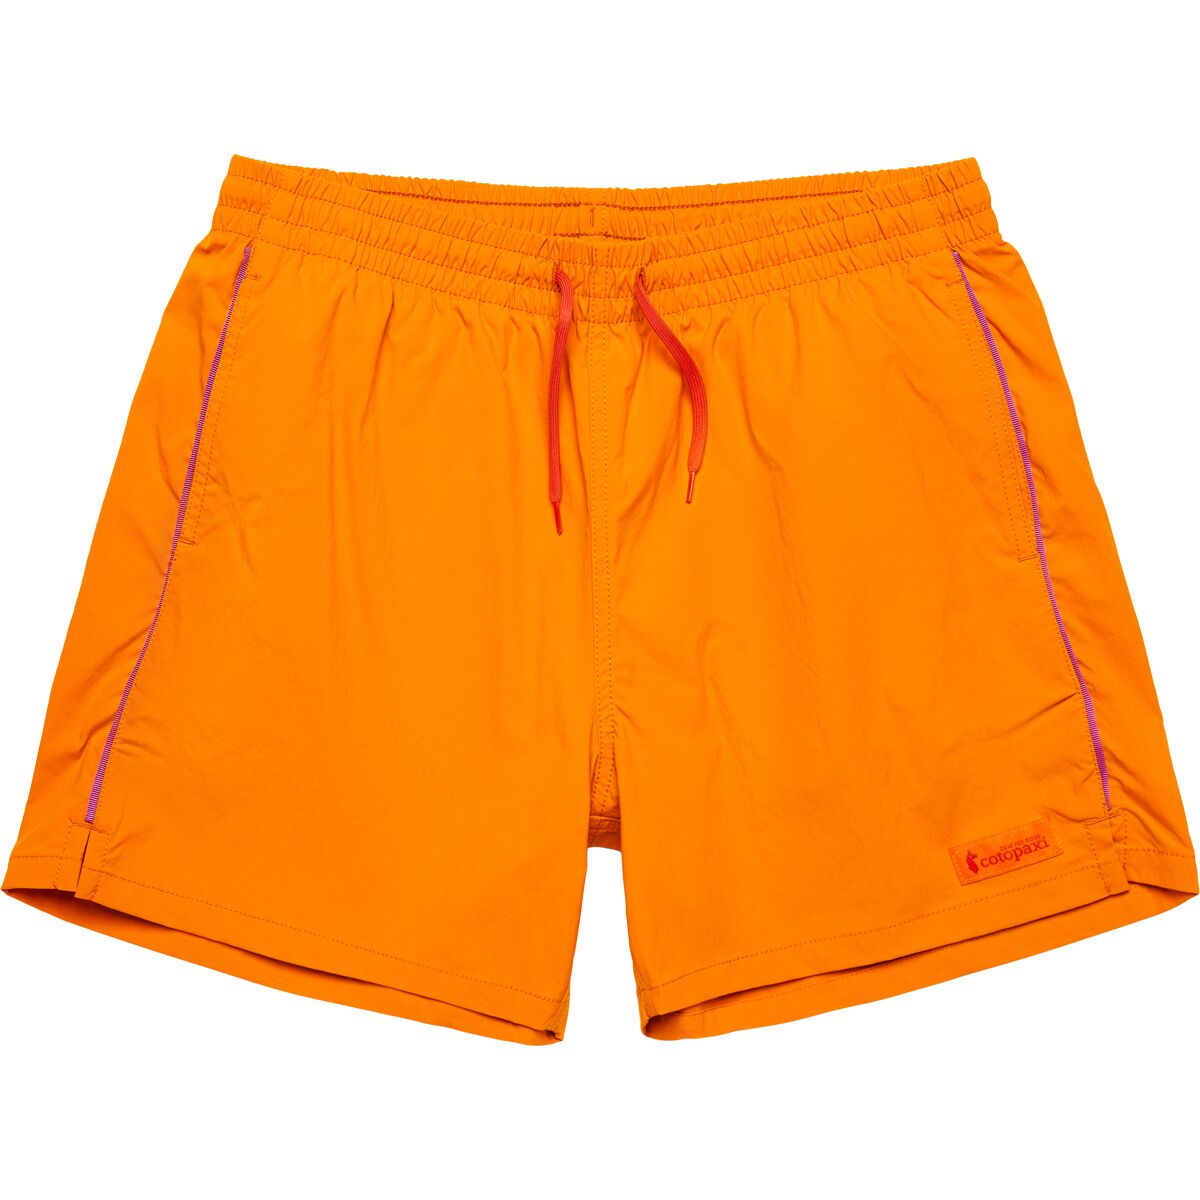 Cotopaxi Brinco Solid Short - Men's - Clothing